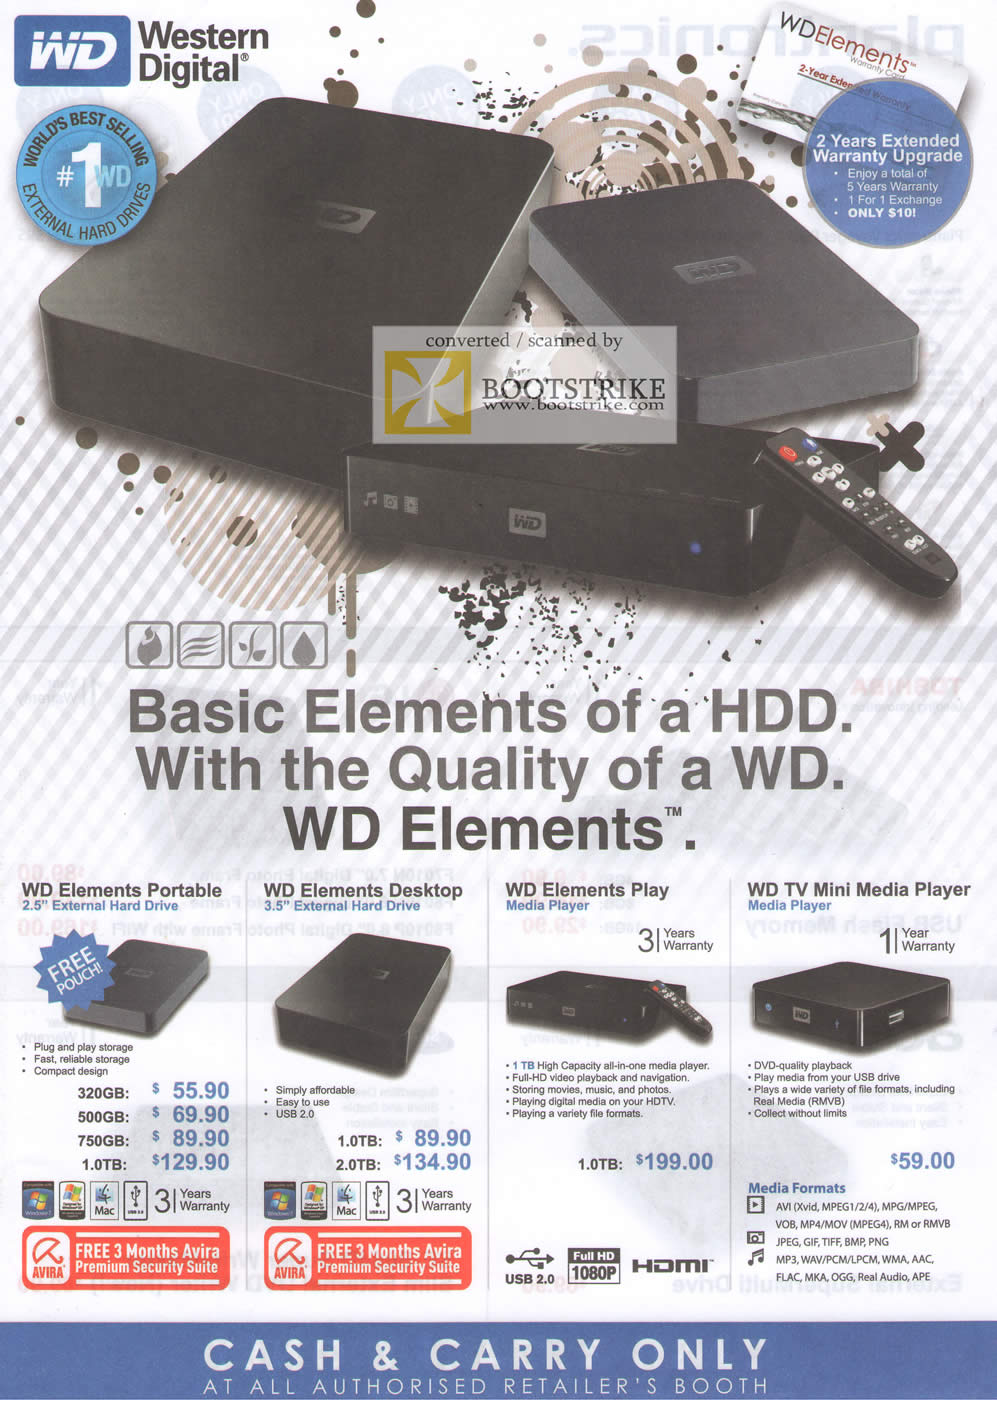 IT Show 2011 price list image brochure of Western Digital External Storage Elements Portable Desktop Play TV Mini Media Player